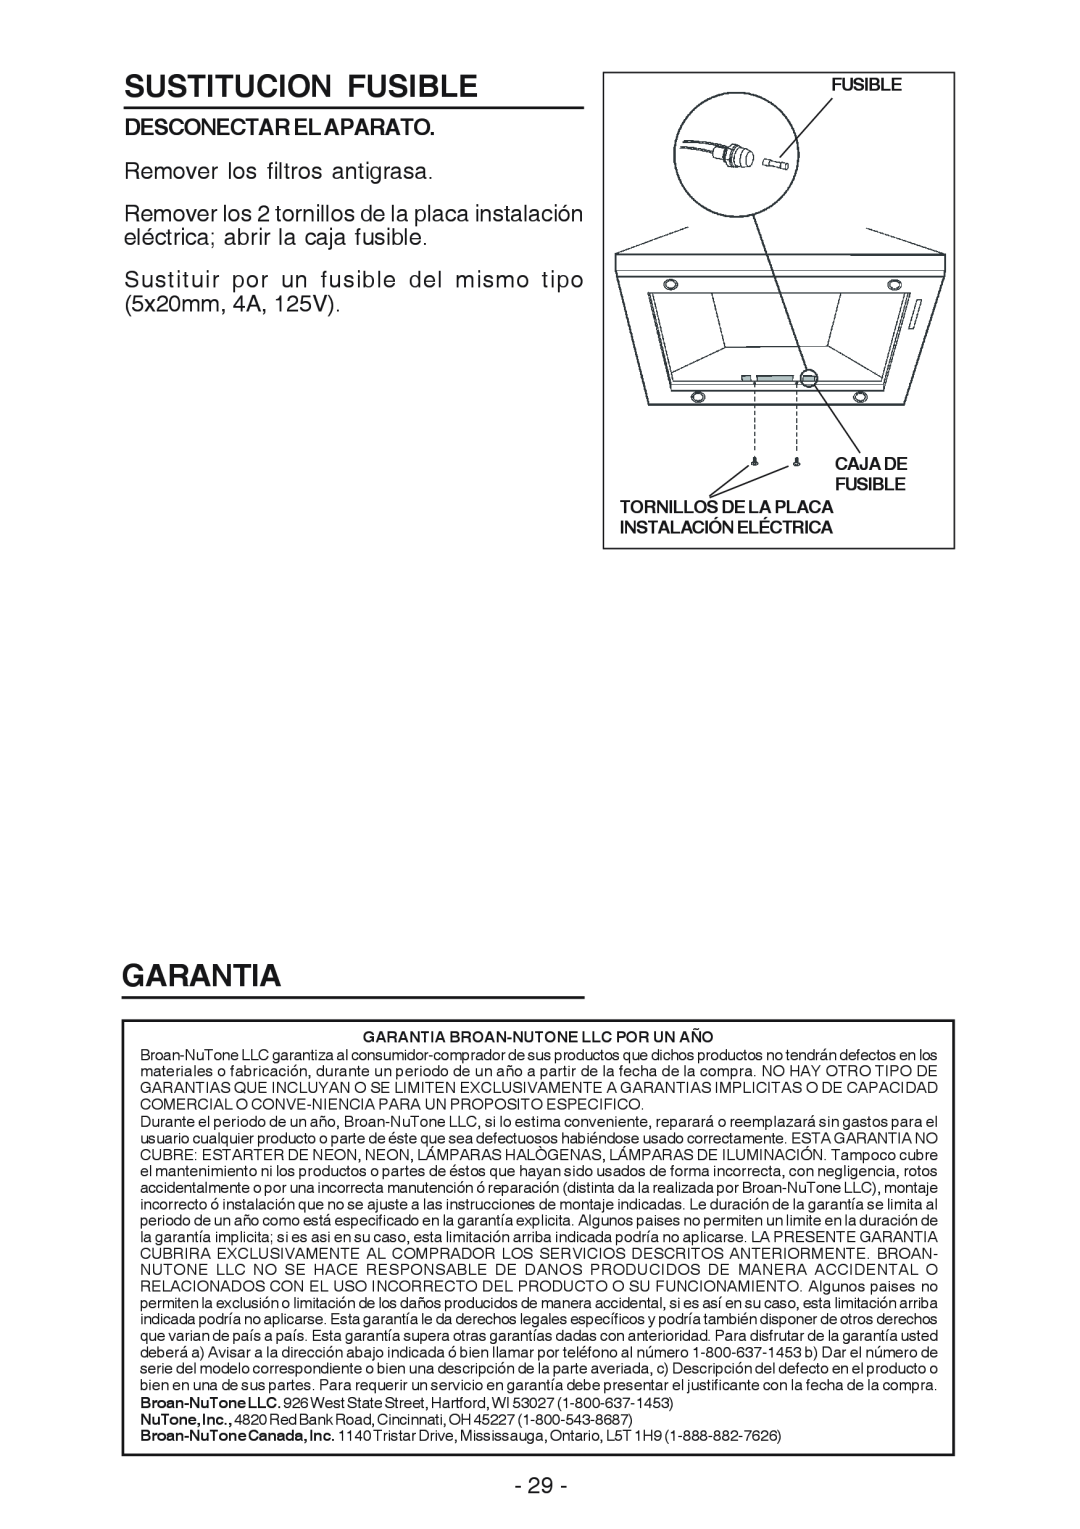 Broan 637004 manual Sustitucion Fusible, Garantia, Desconectarelaparato, Fusible Caja De Fusible Tornillos De La Placa 